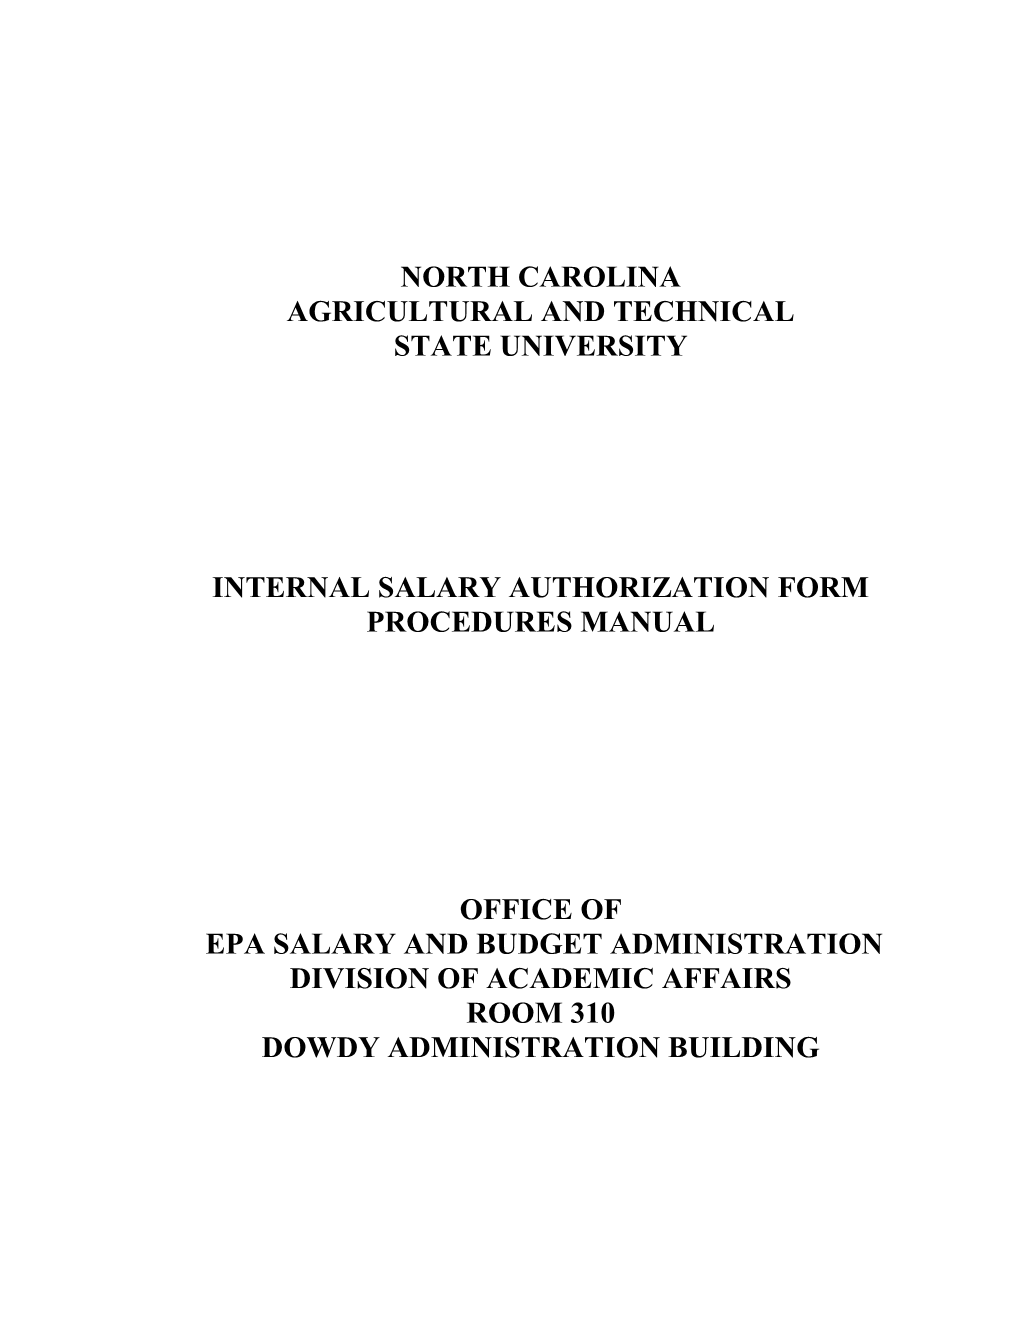 Internal Salary Authorization Form